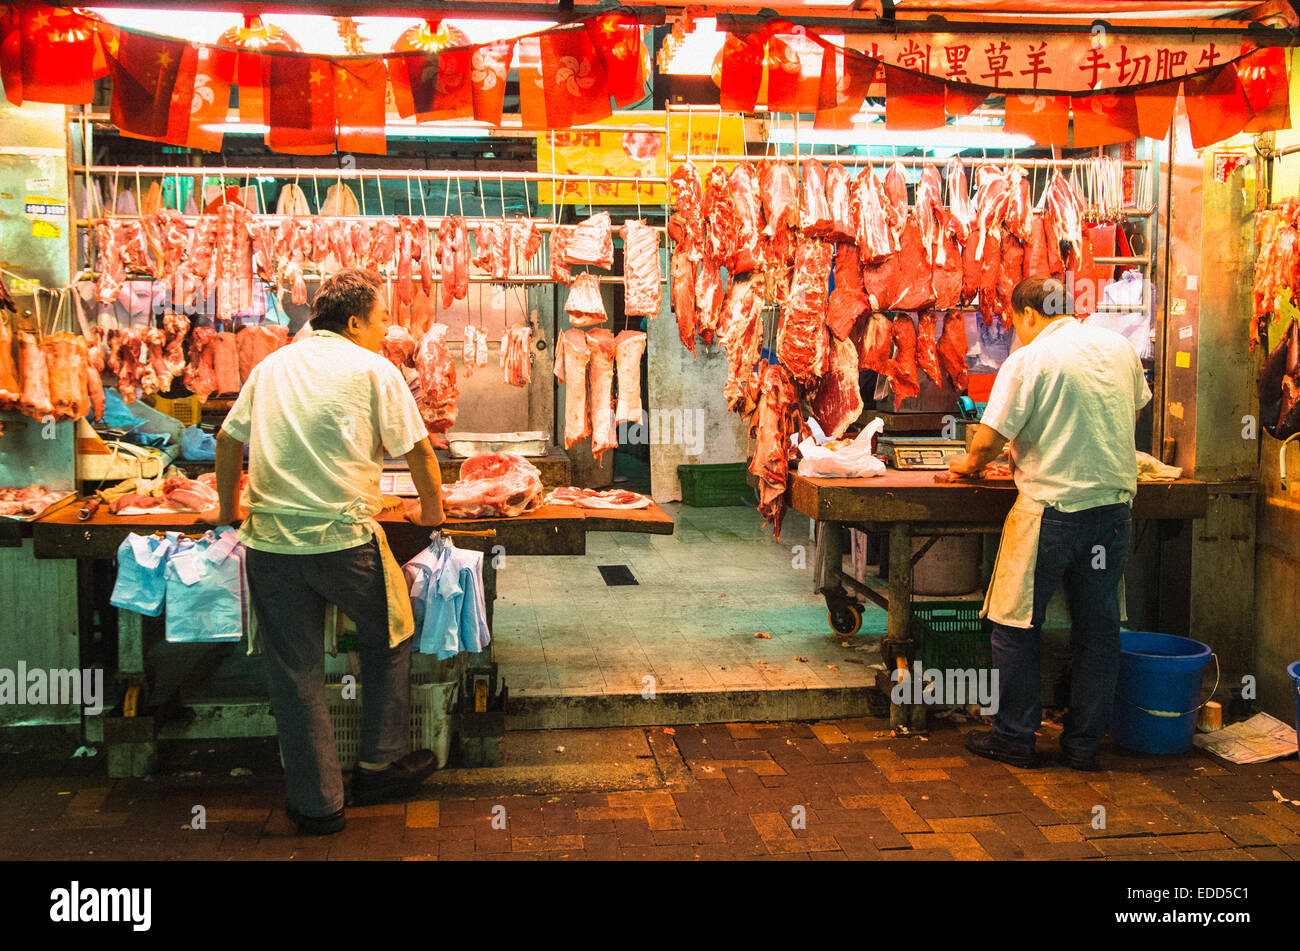 Macellerie al mercato notturno di Hong Kong, Cina. Foto Stock